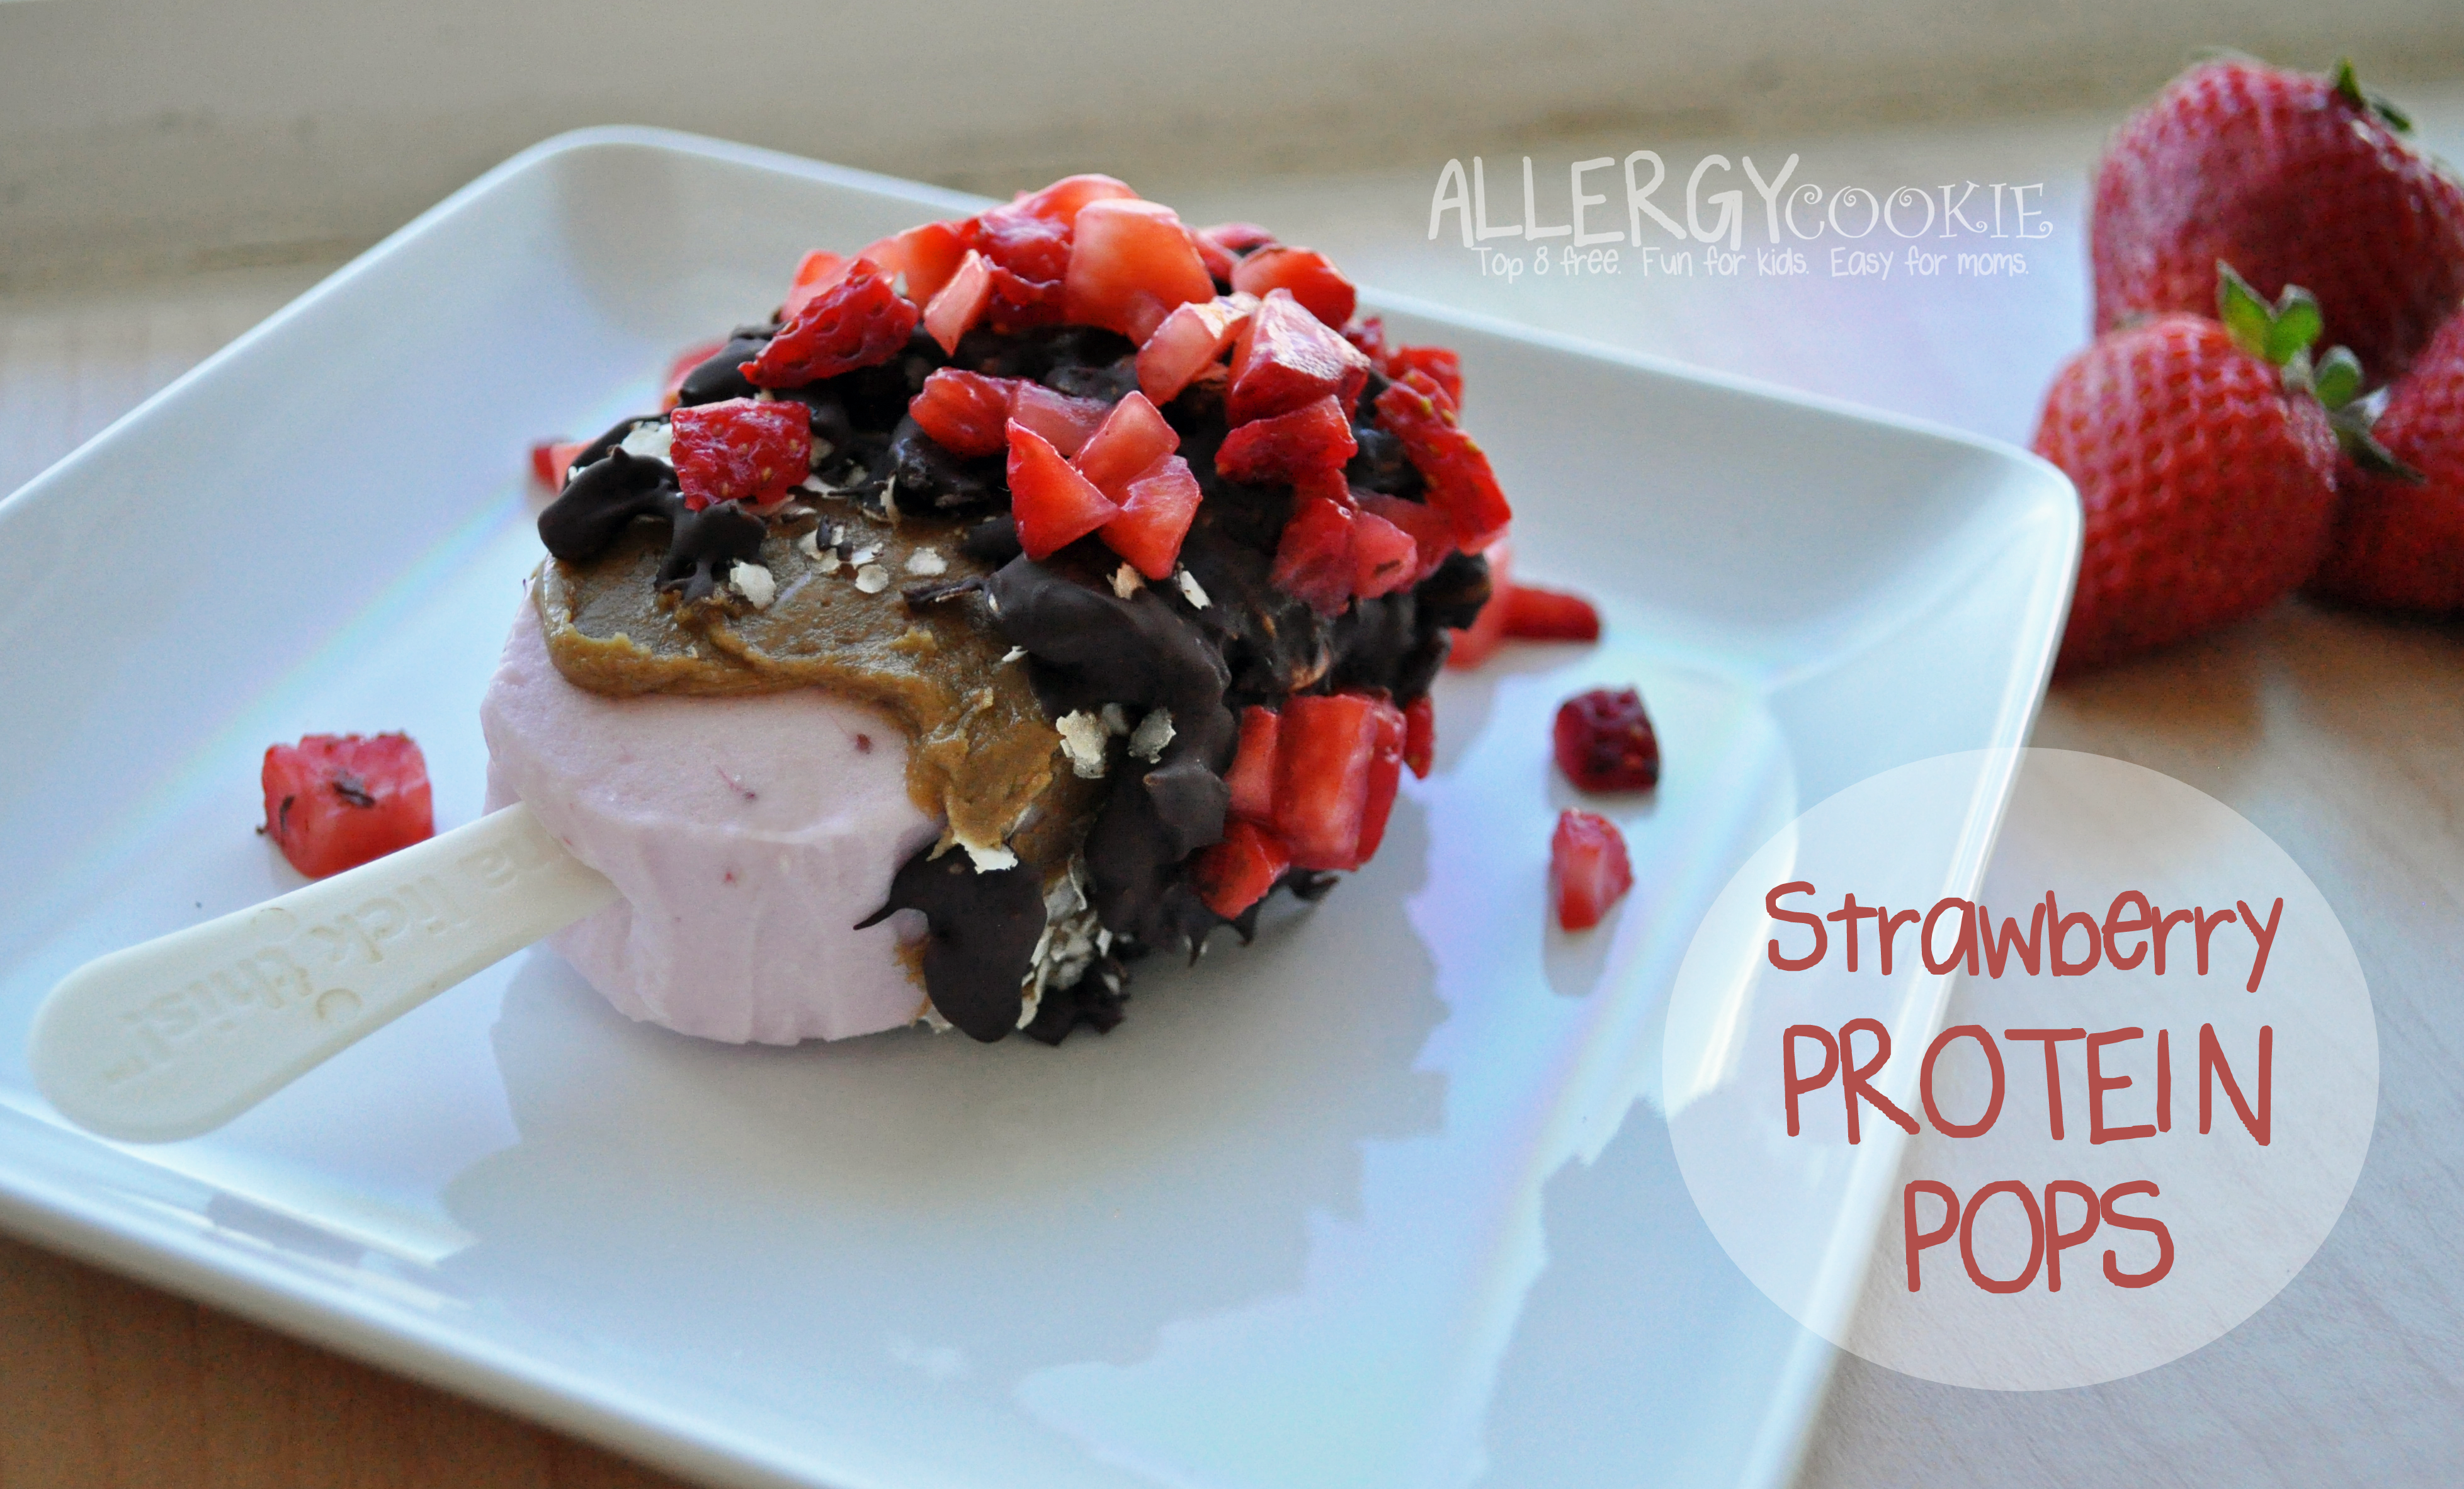 Strawberry Protein Pops (gluten free, vegan, top 8 free)